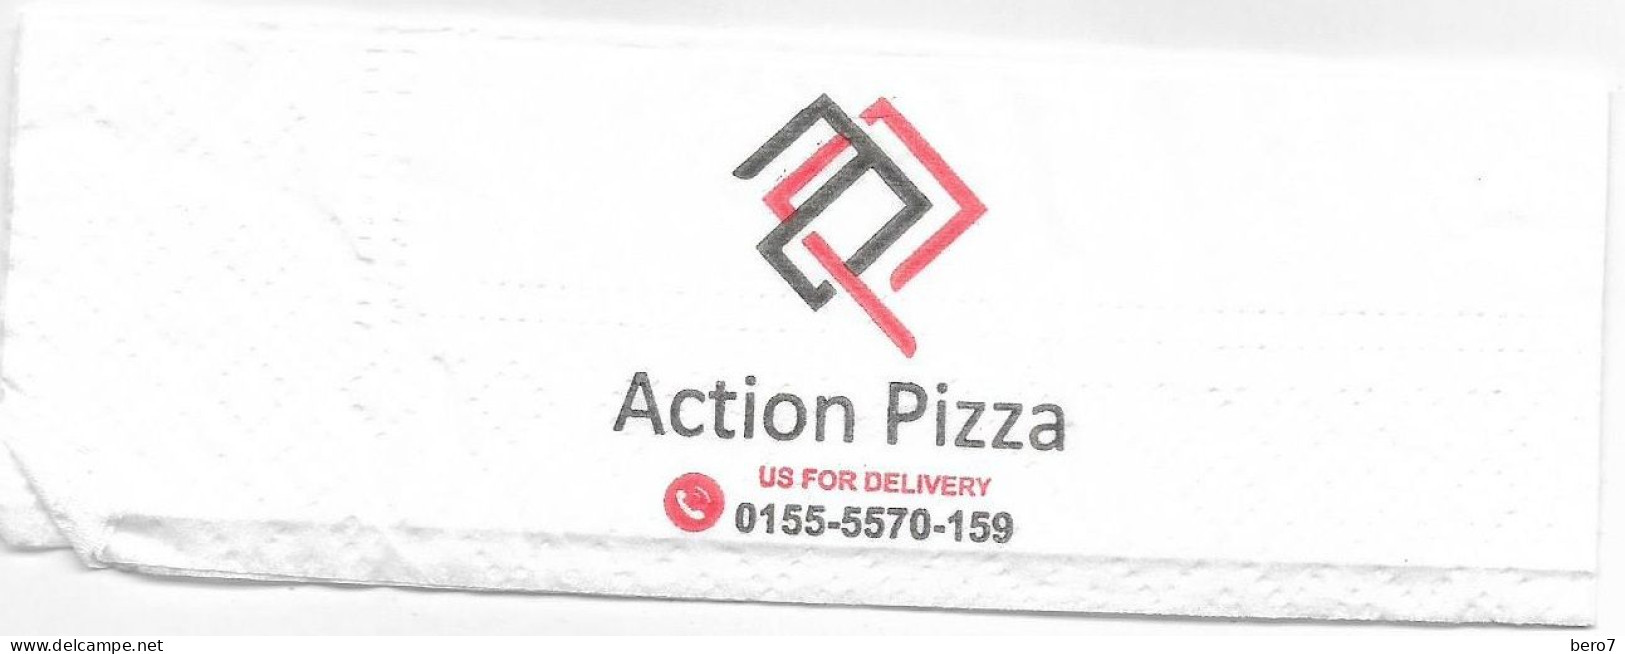 EGYPT - Action Pizza Napkins (Egypte) (Egitto) (Ägypten) (Egipto) (Egypten) Africa - Reclameservetten